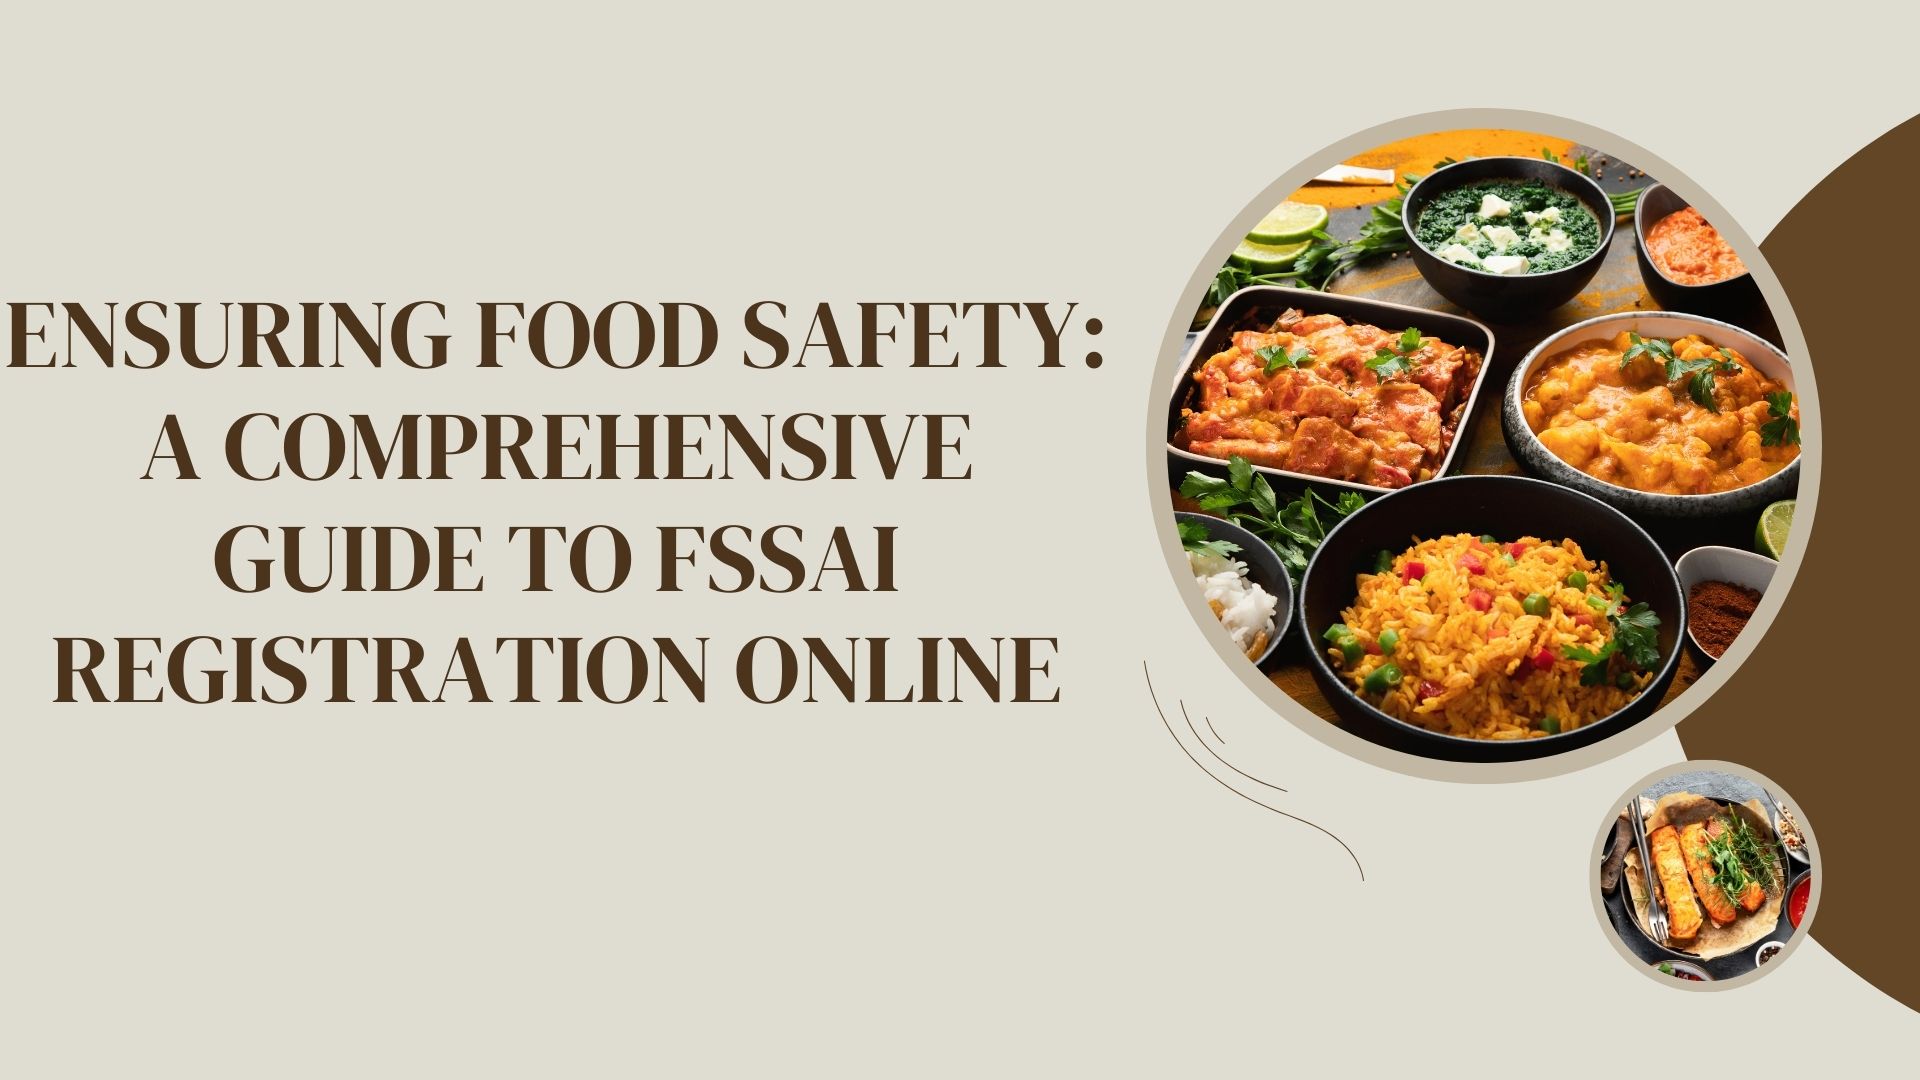 Ensuring Food Safety: A Comprehensive Guide to FSSAI Registration Online